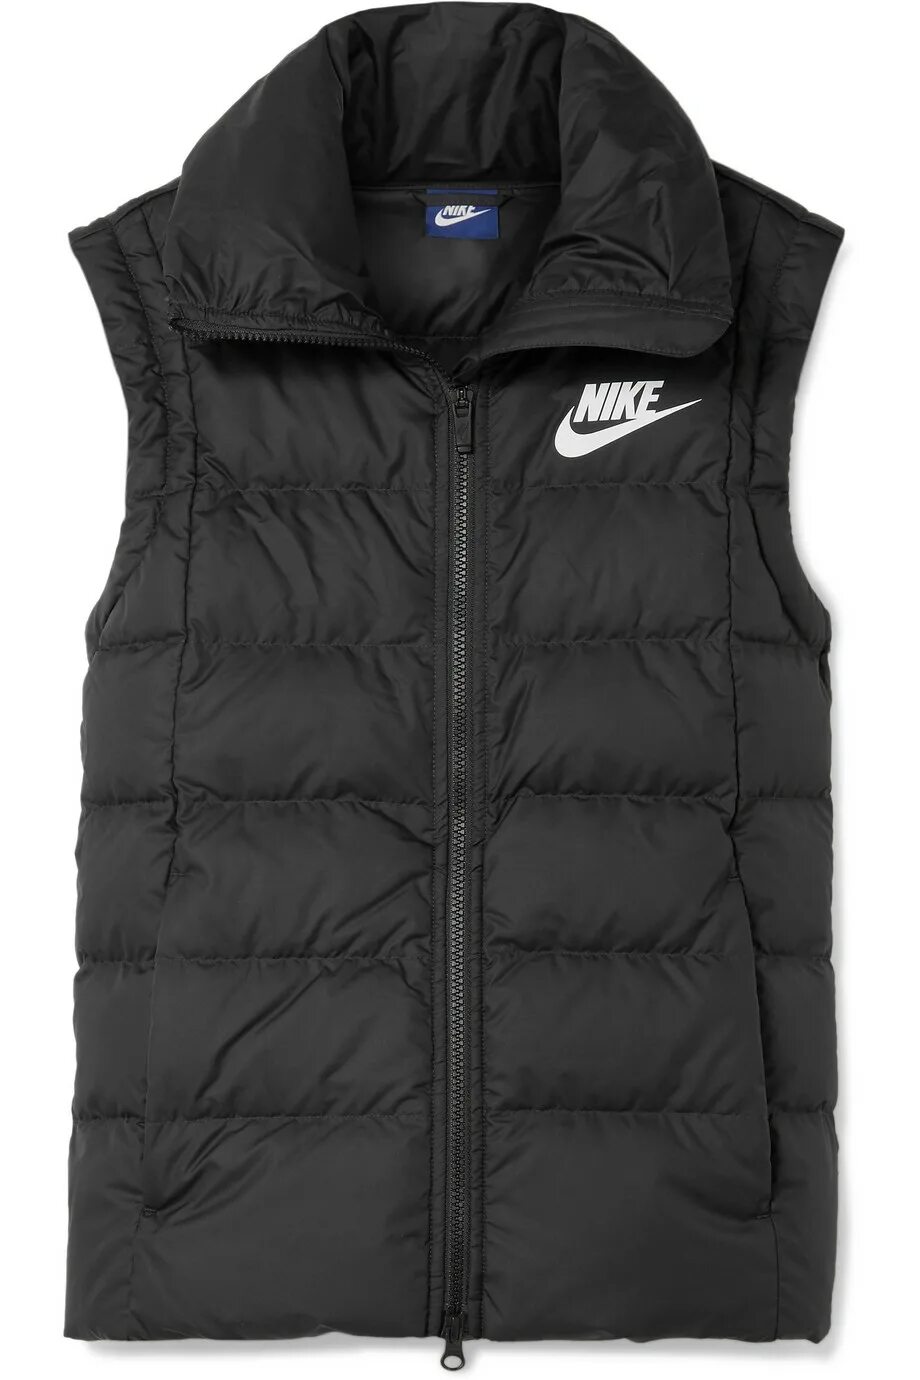 Найк жилет. Жилет мужской Nike Basic down Vest 419009-238. Nike / жилет Allure down Vest. Жилетка Nike Nocta. Жилет Nike Synthetic fill.